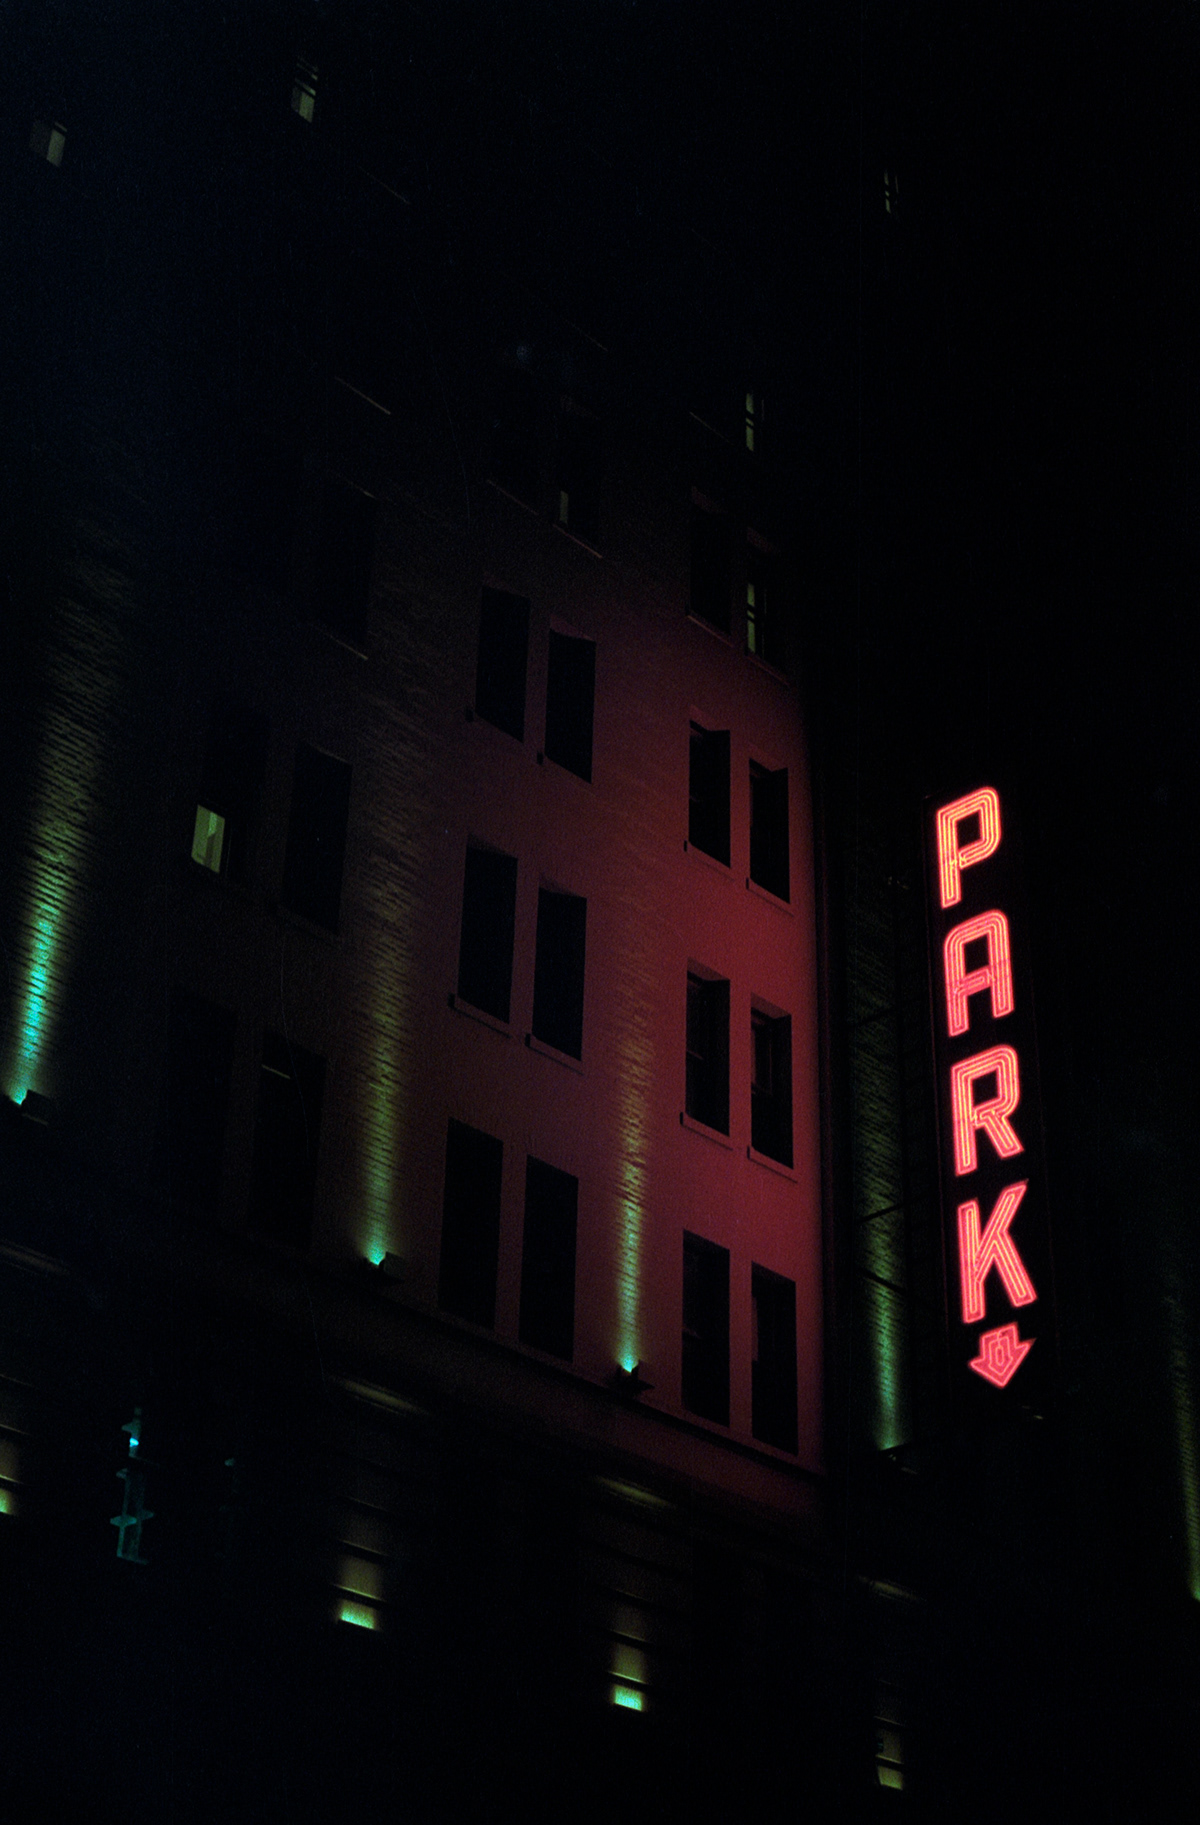 times square midtown night photography 35mm film cinestill film photography kodak neon led lights Manhattan